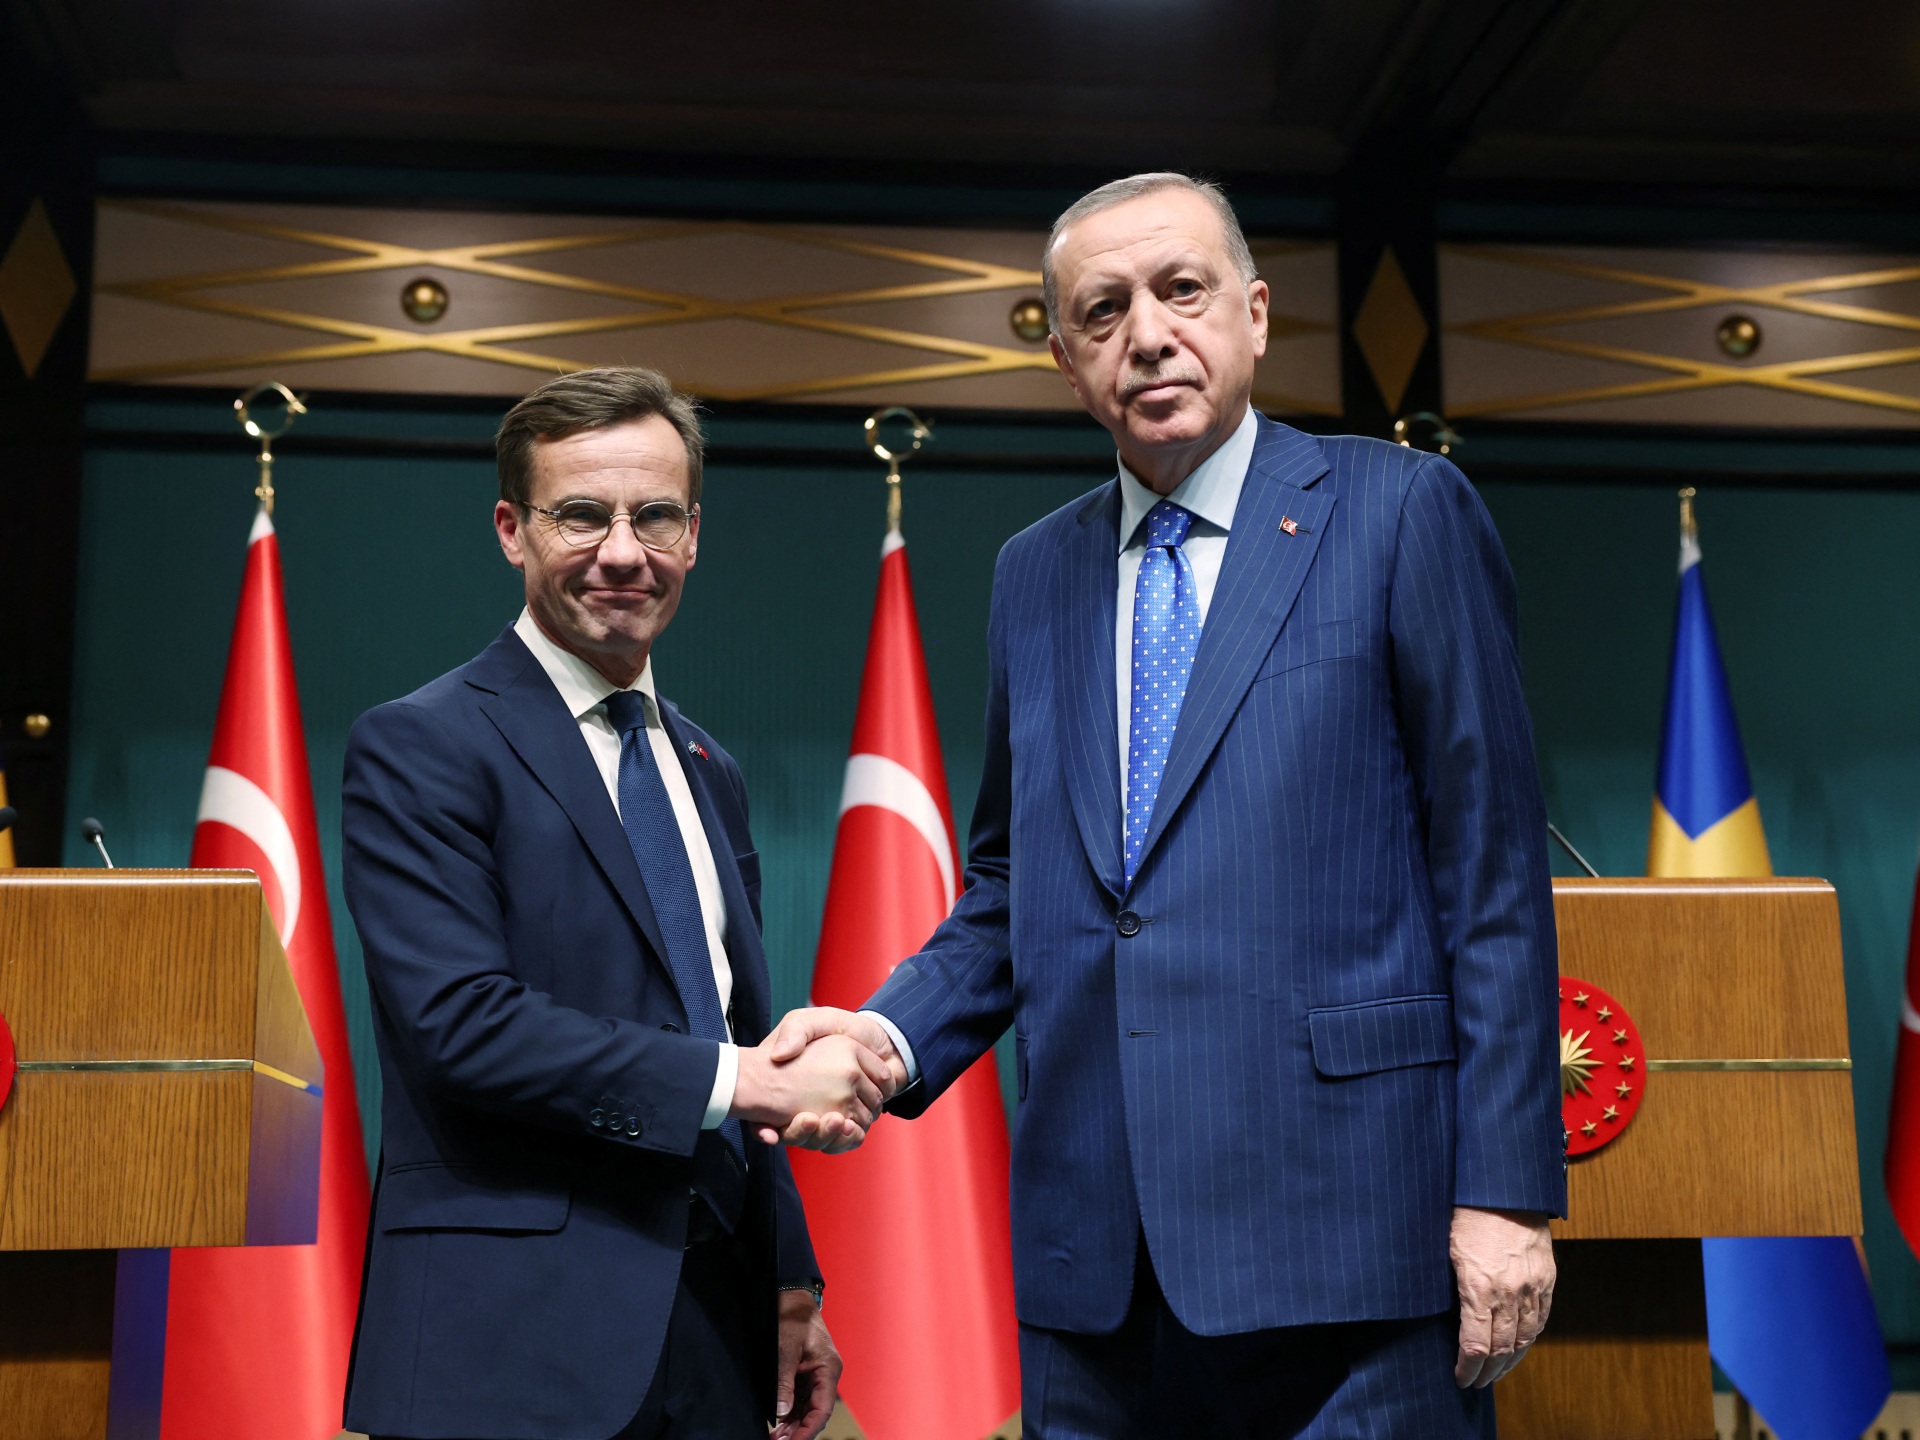 Turkey demands Sweden take concrete steps prior to NATO approval